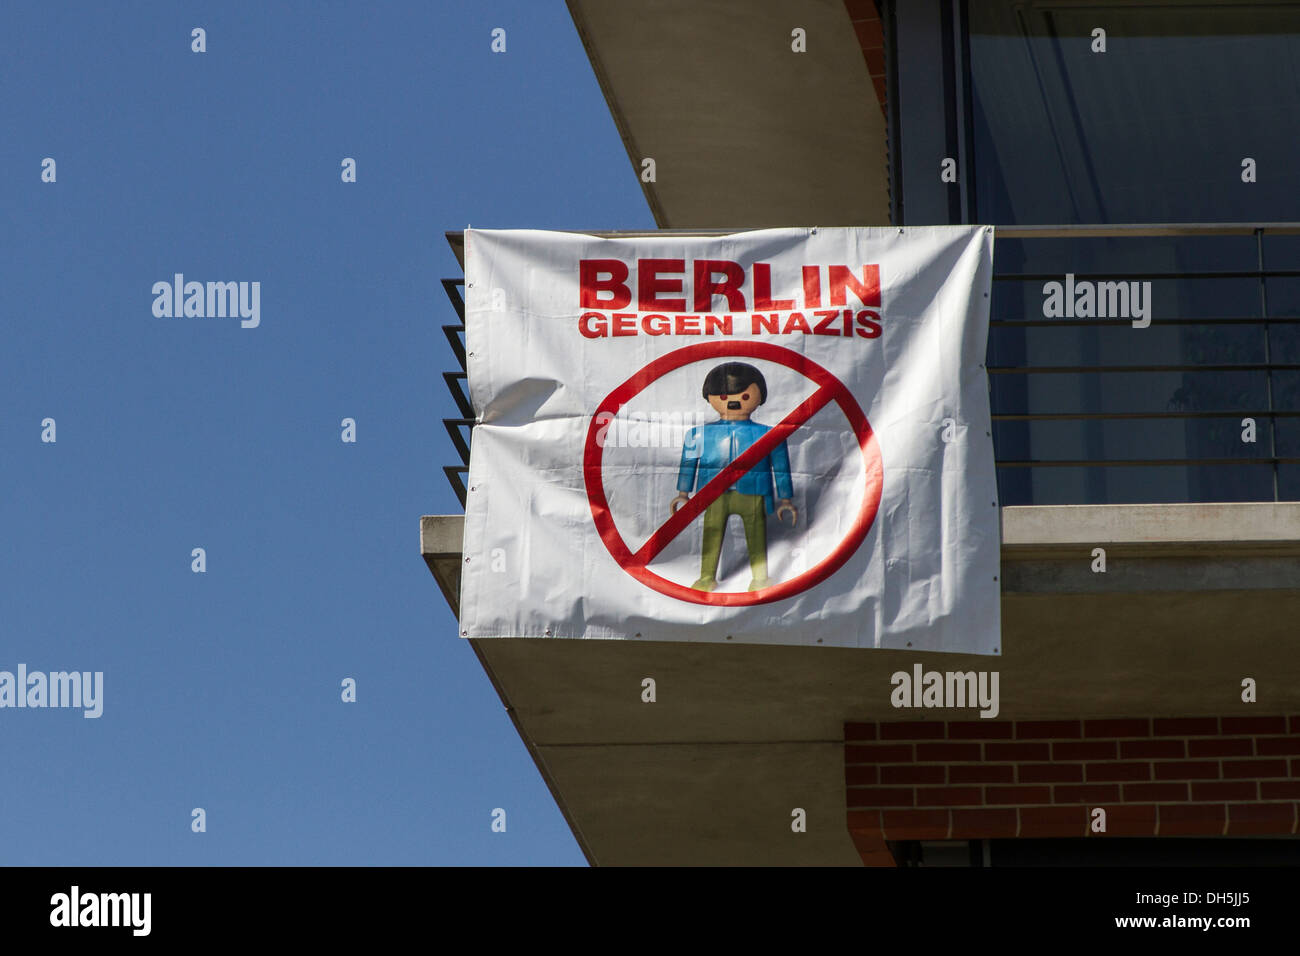 Banner "Berlin gegen Nazis", German for "Berlin against Nazis", with  crossed-out Hitler-Playmobil figure, Berlin Stock Photo - Alamy